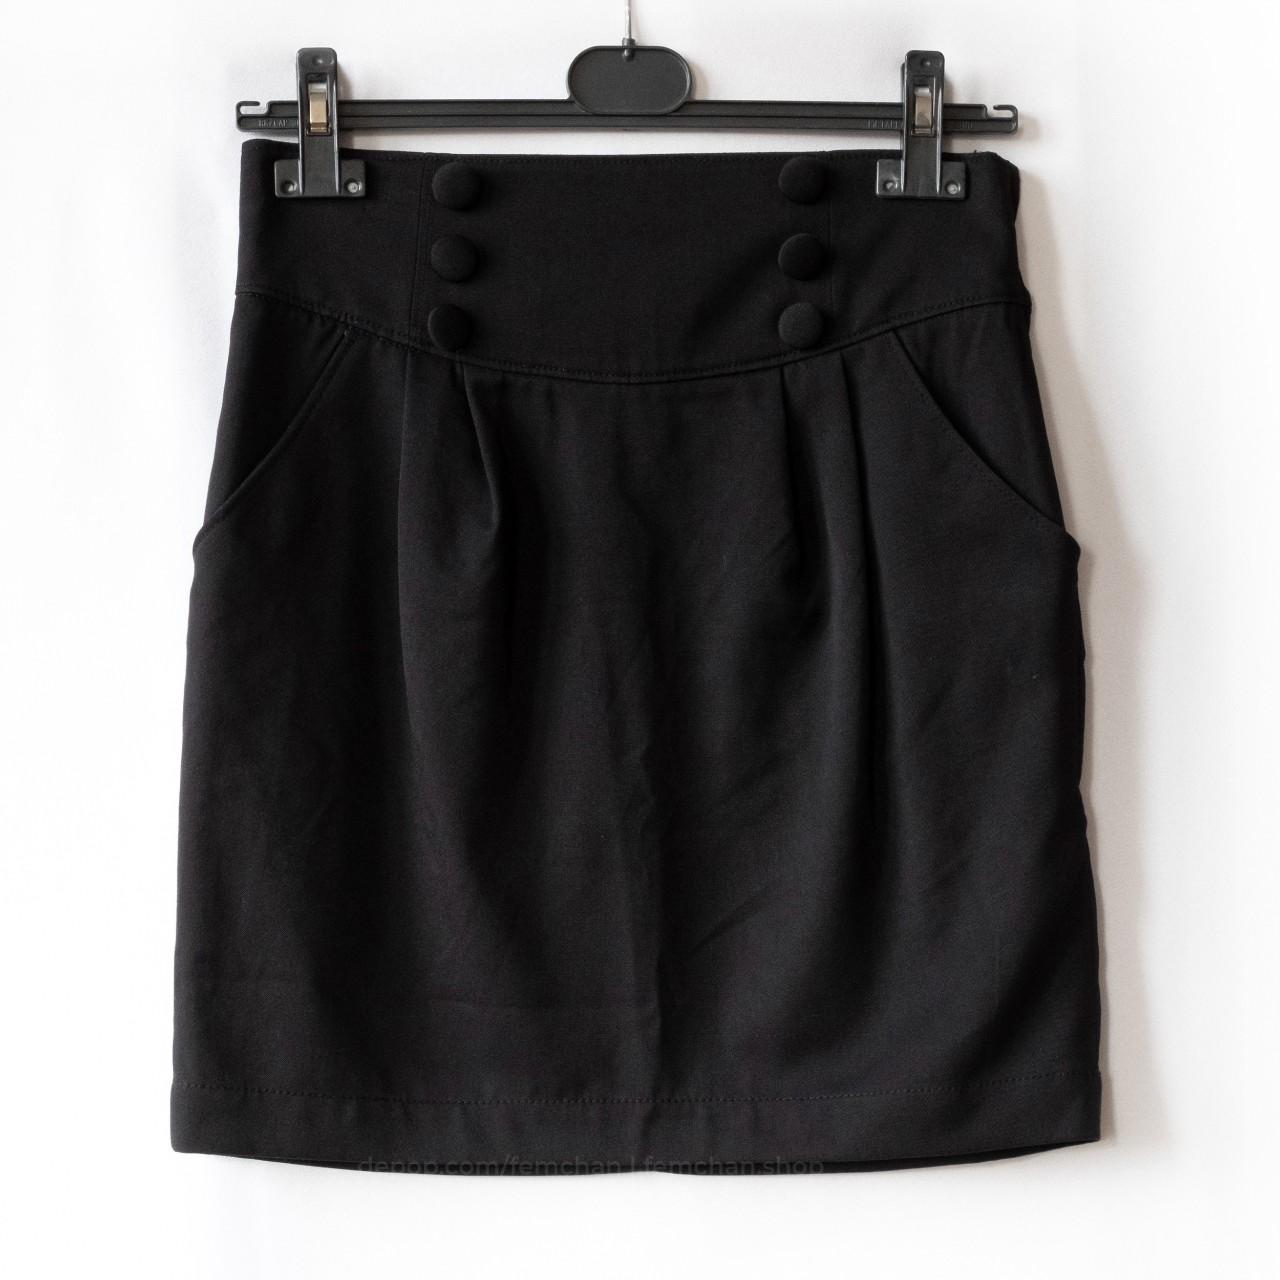 Black high-waisted tulip skirt with button details,... - Depop